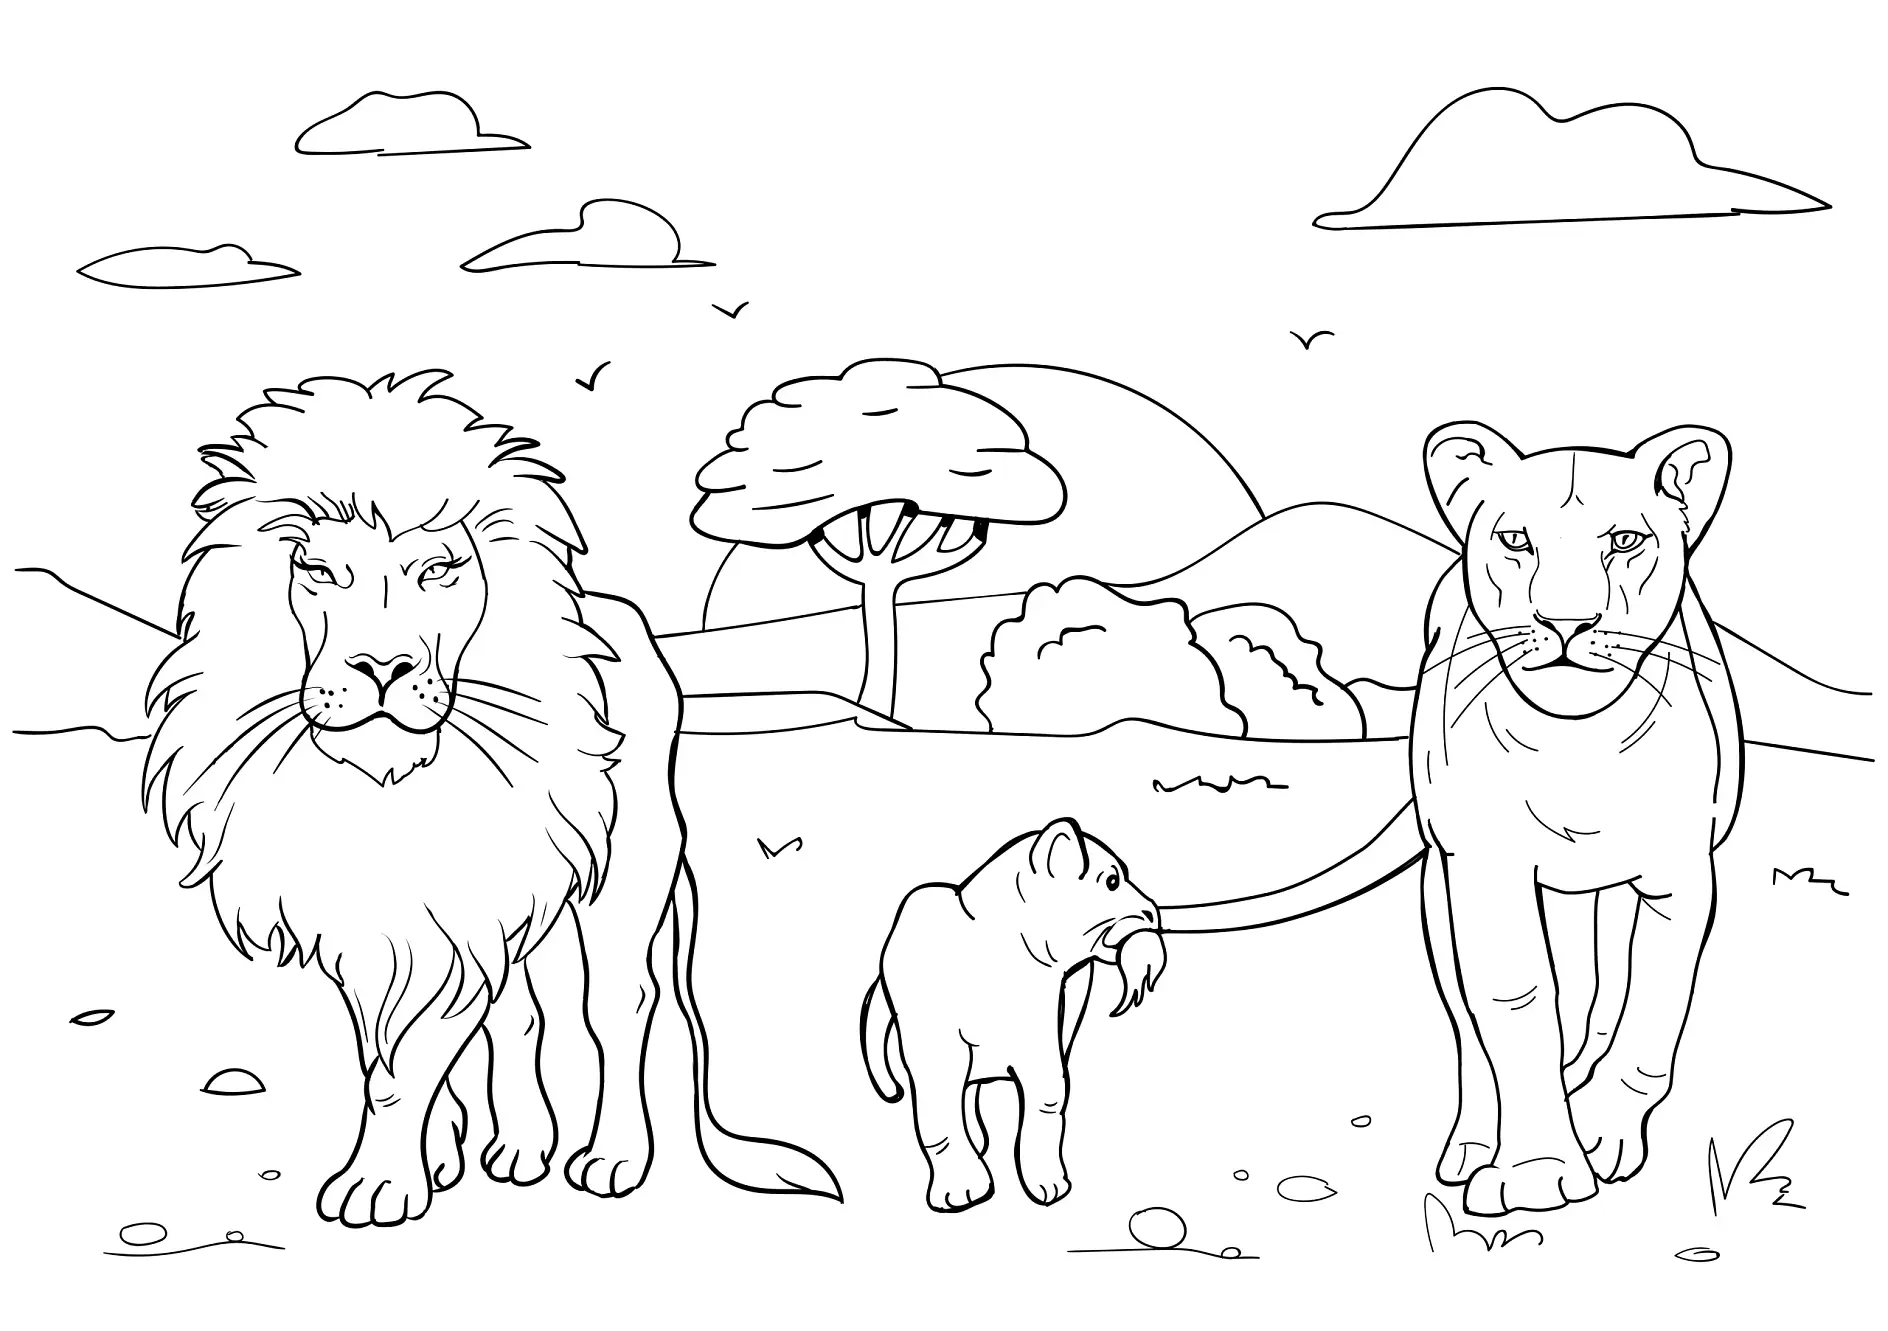 Ausmalbild Löwenfamilie in SavannenlandschaftRealistic Lion Coloring Pages.